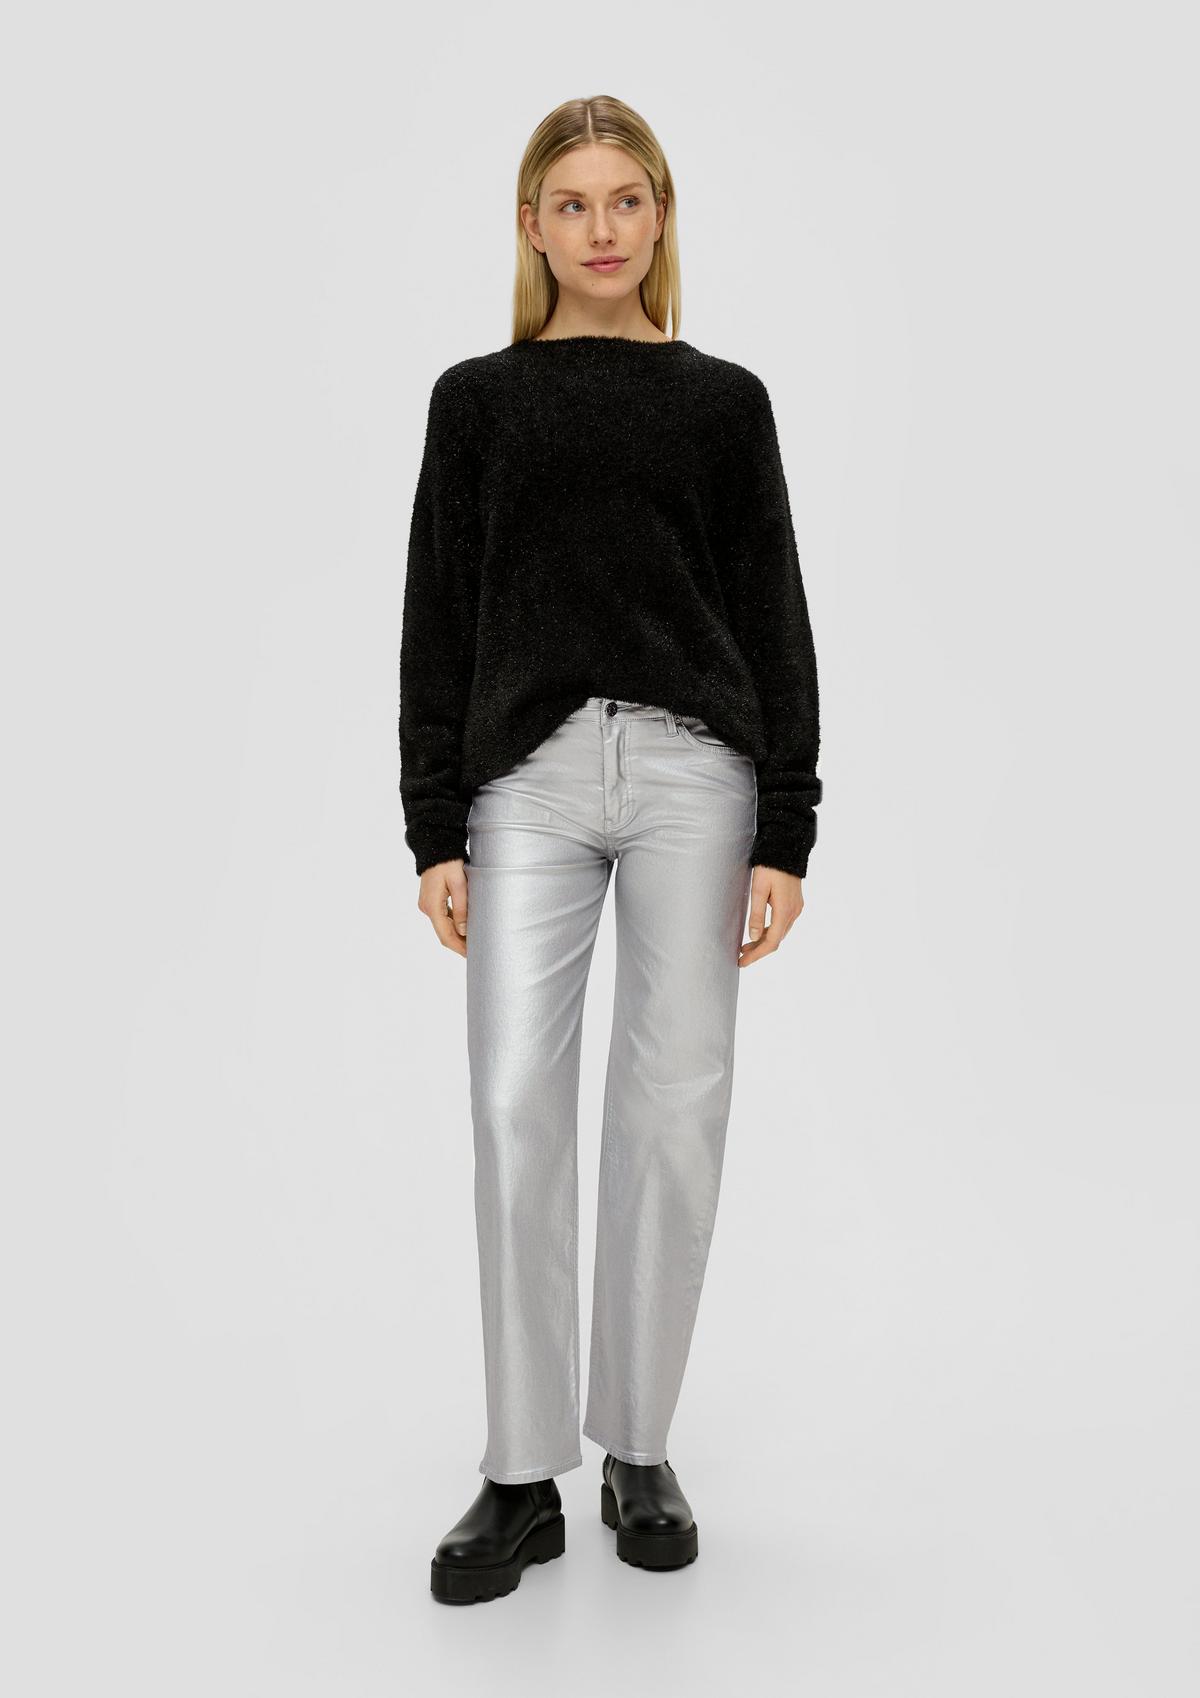 s.Oliver Karolin jeans / regular fit / mid rise / straight leg / metallic